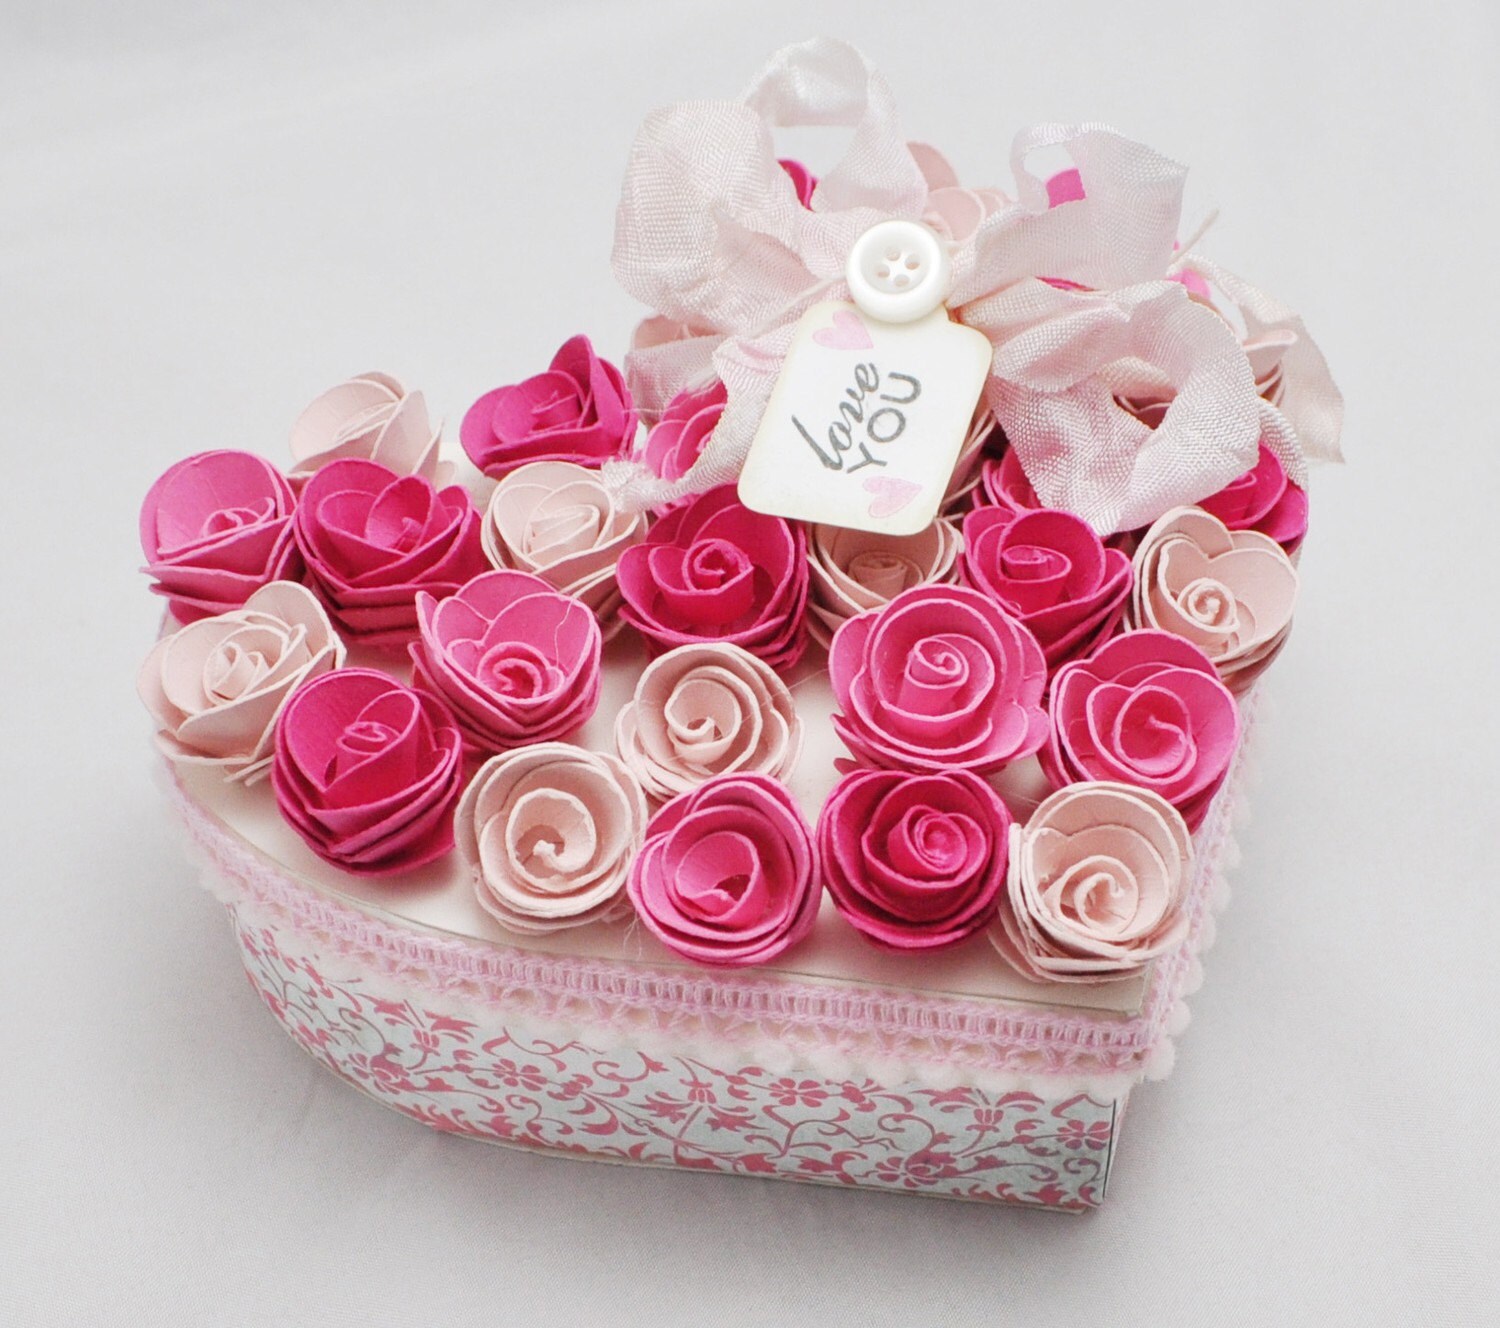 Heart Shaped Box With Roses Shabby Chic by CardsandMoorebyTerri